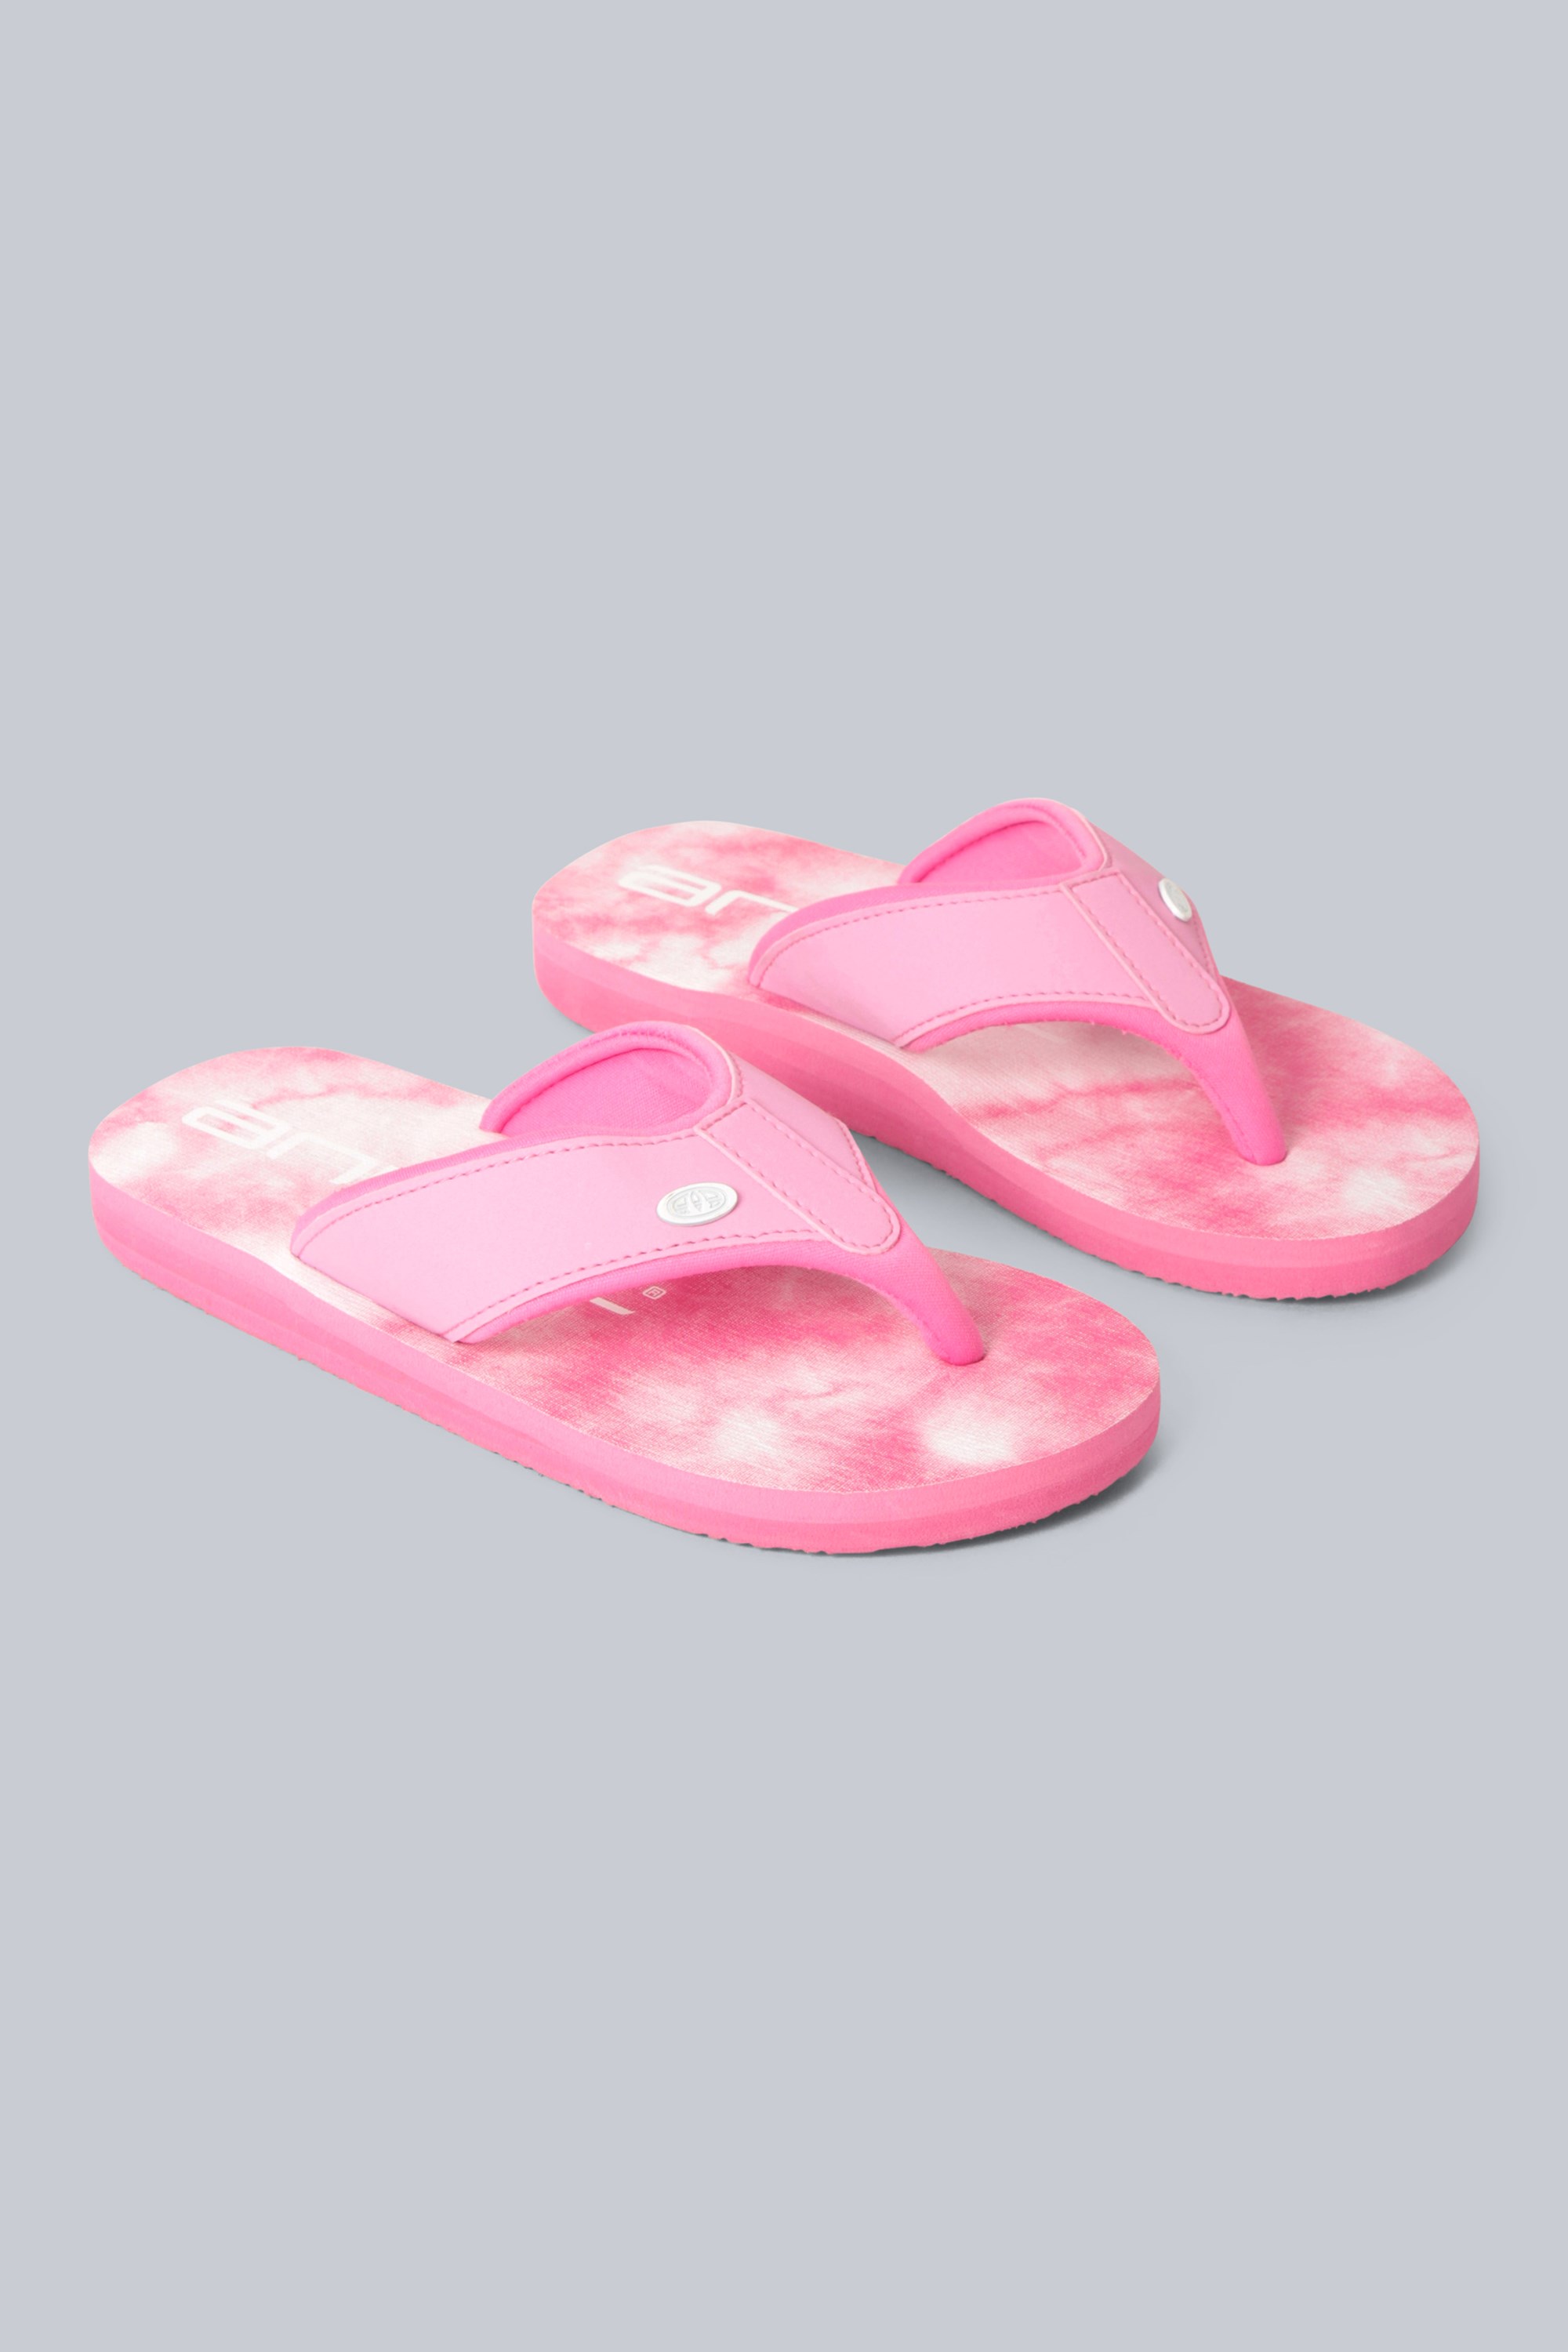 Swish Kids Recycled Flip-Flops - Pink